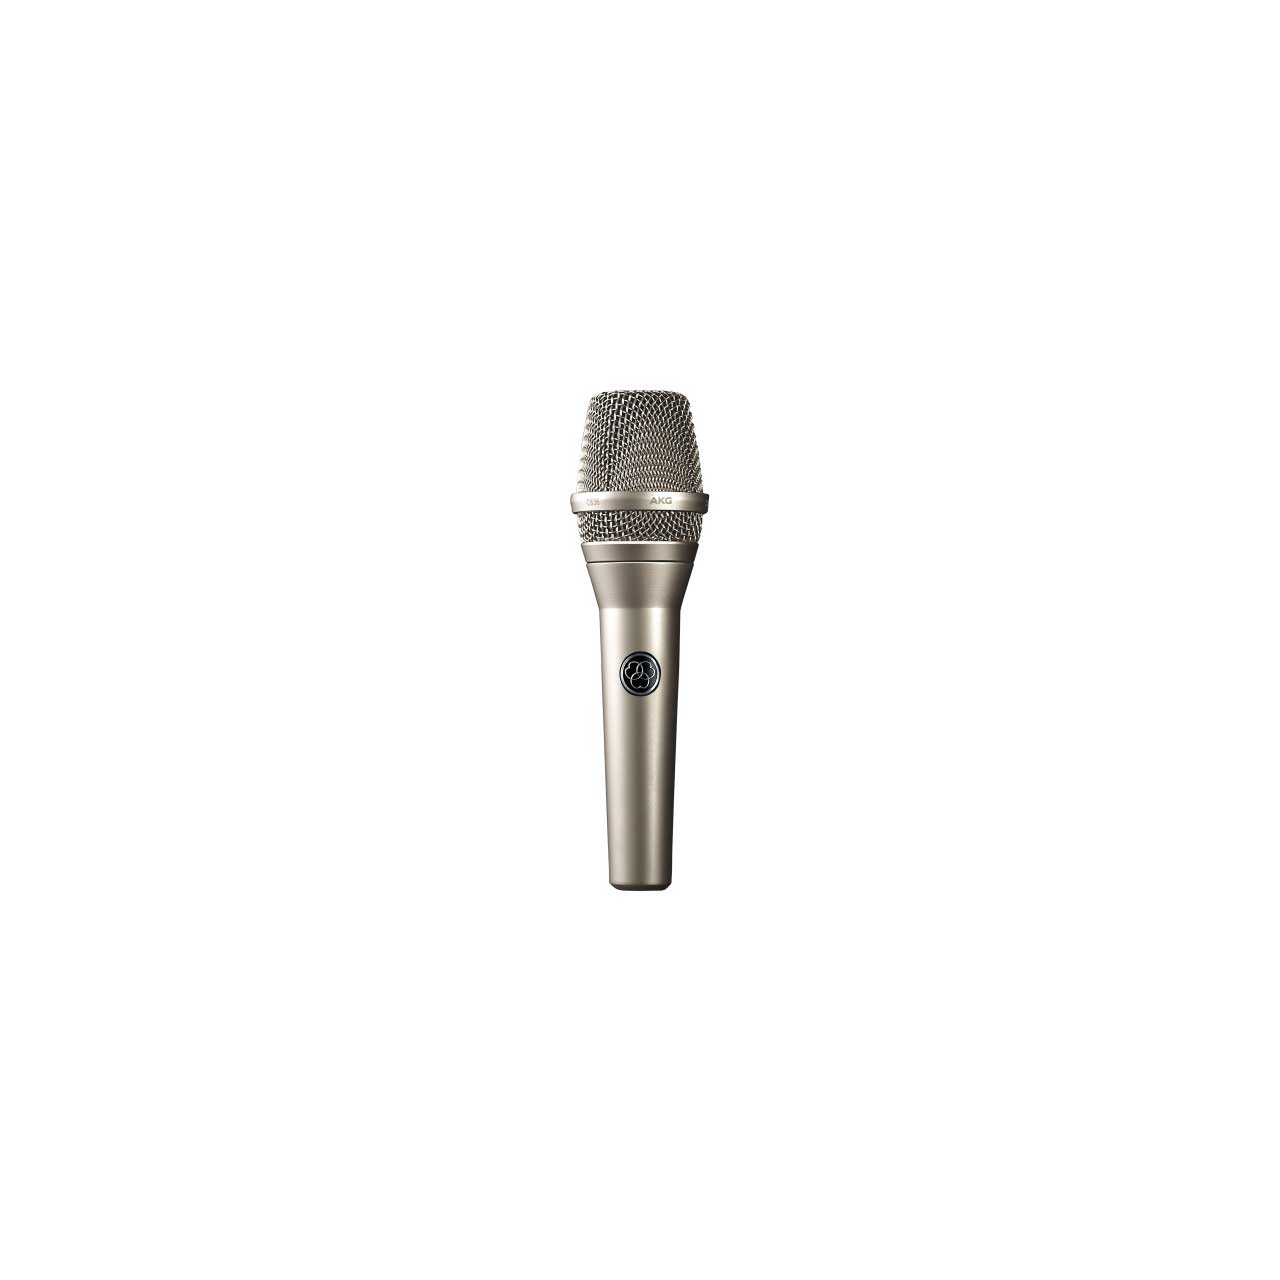 AKG C636 Handheld Condenser Vocal Microphone - Nickel